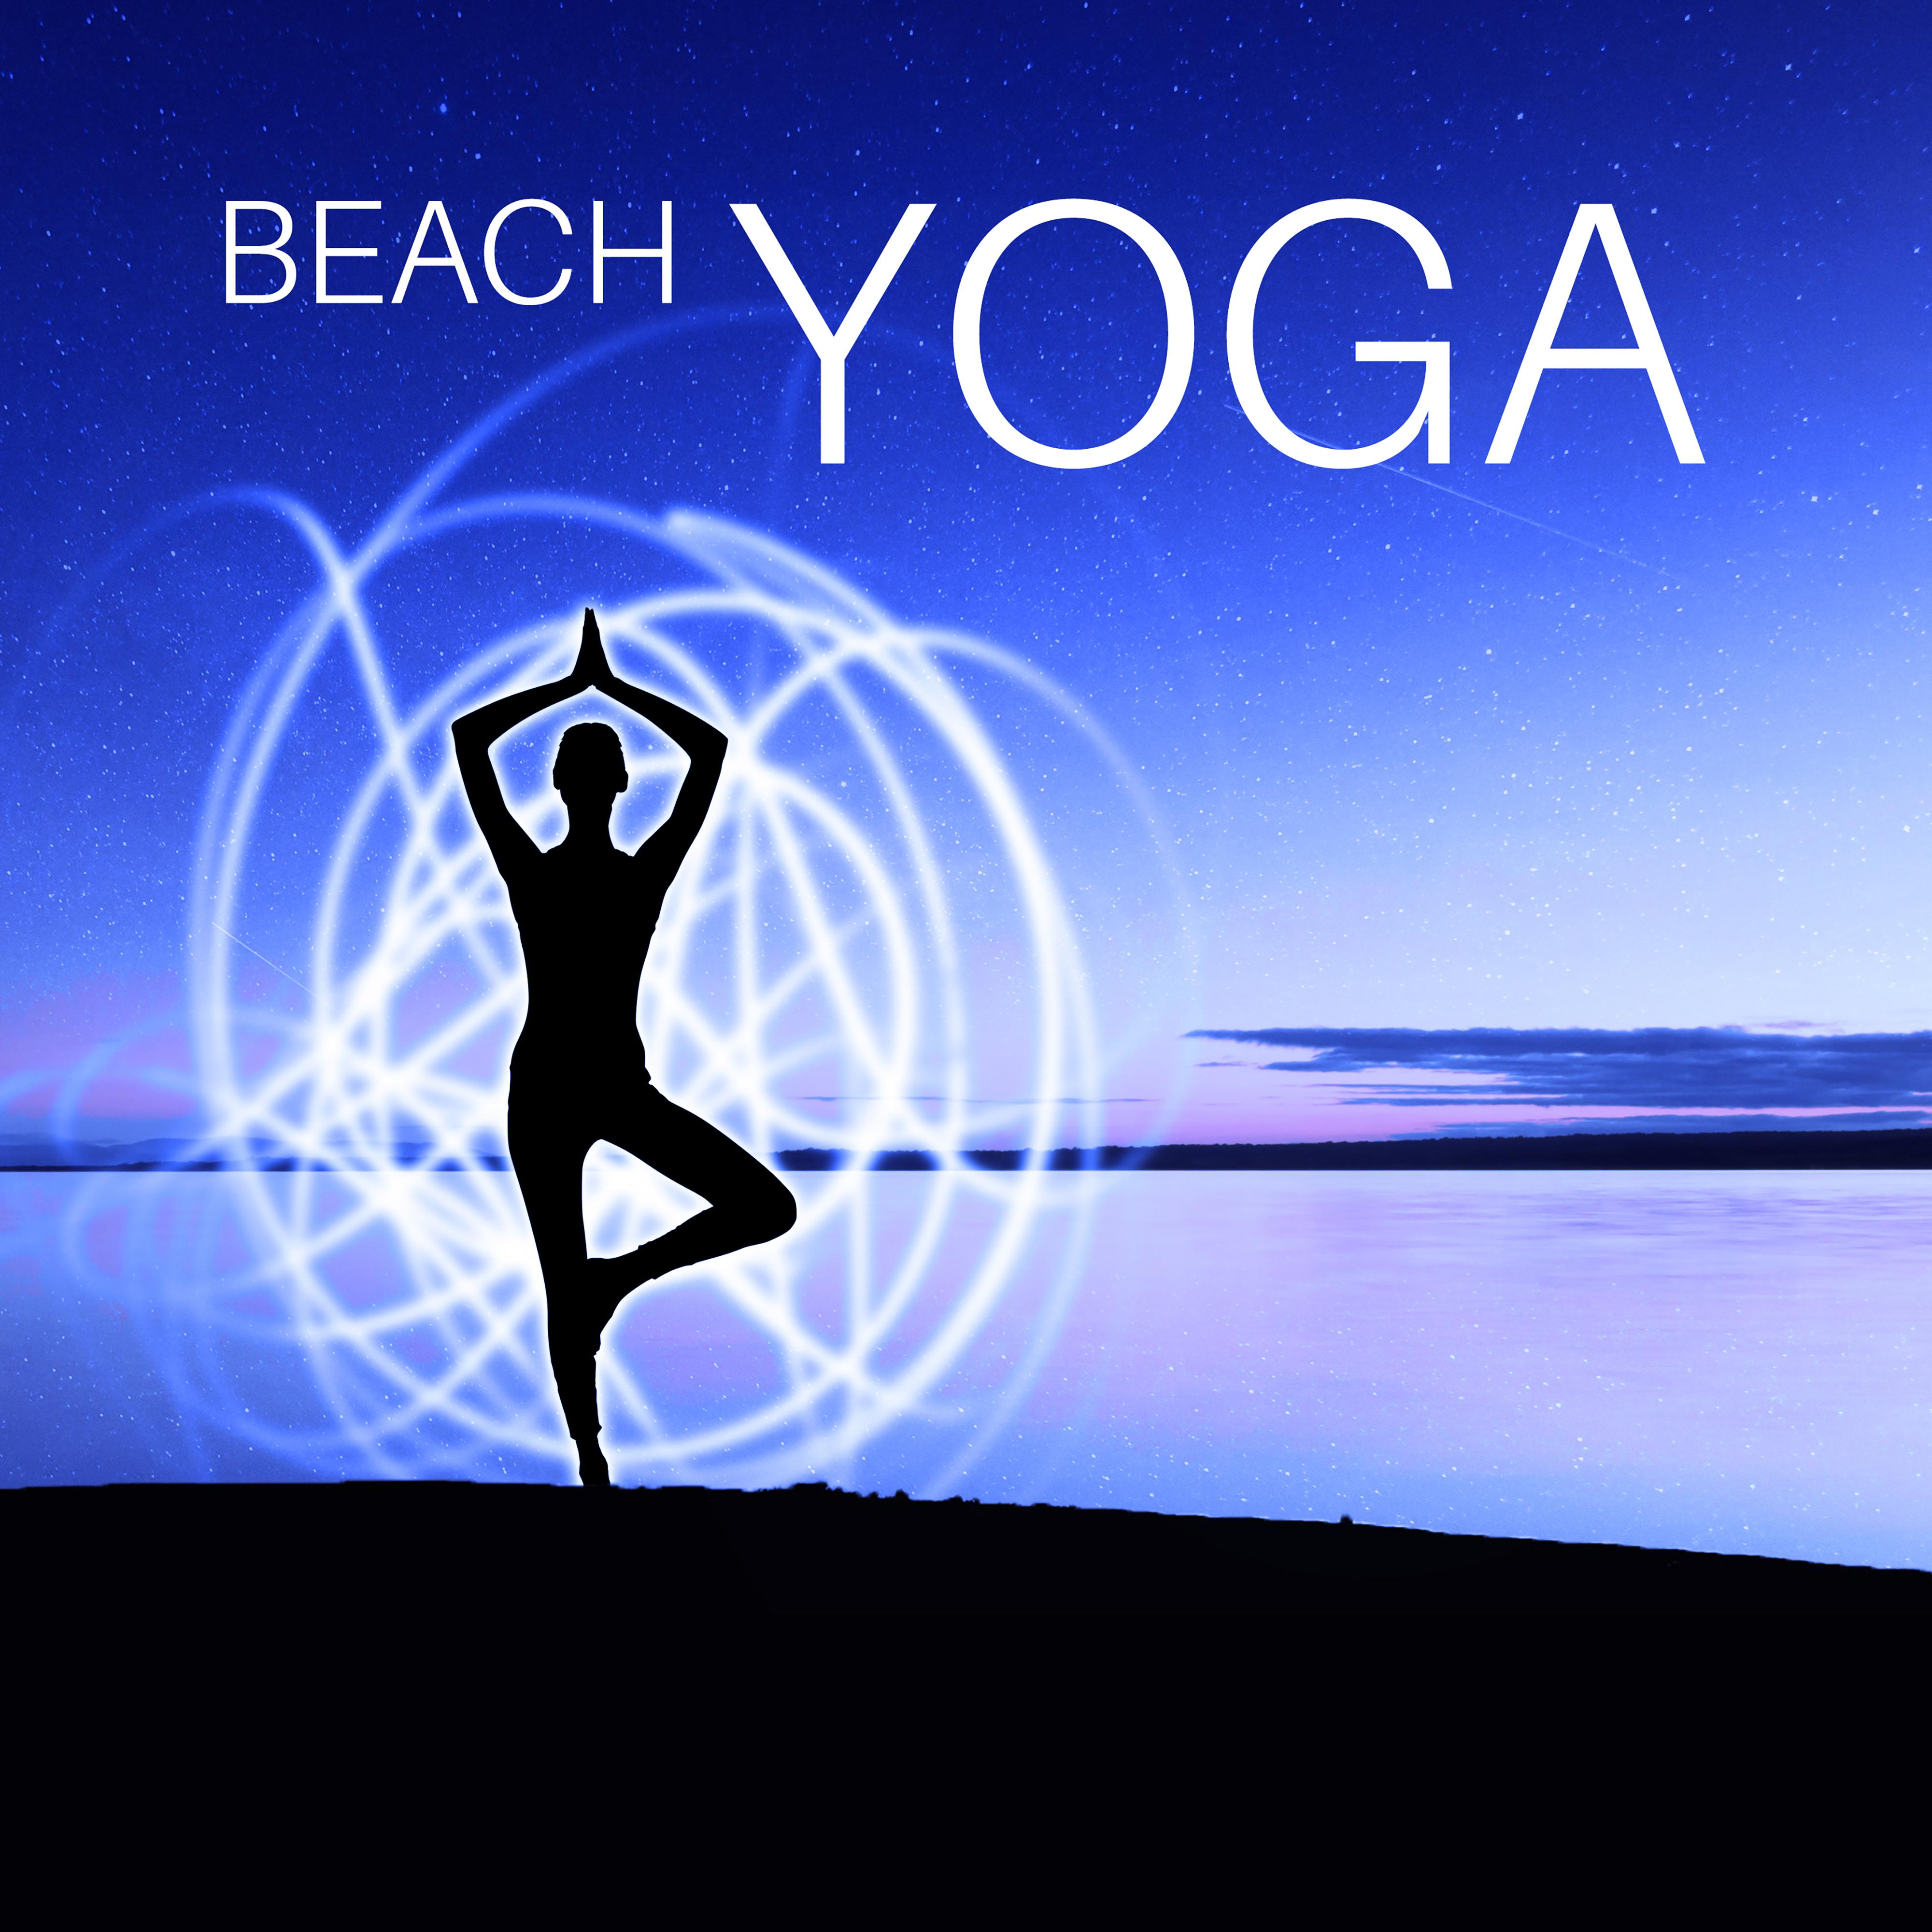 Beach Yoga – New Age Music for Yoga, Meditation, Music for Beginners, Feel The Spirit of Tibet, Relaxation